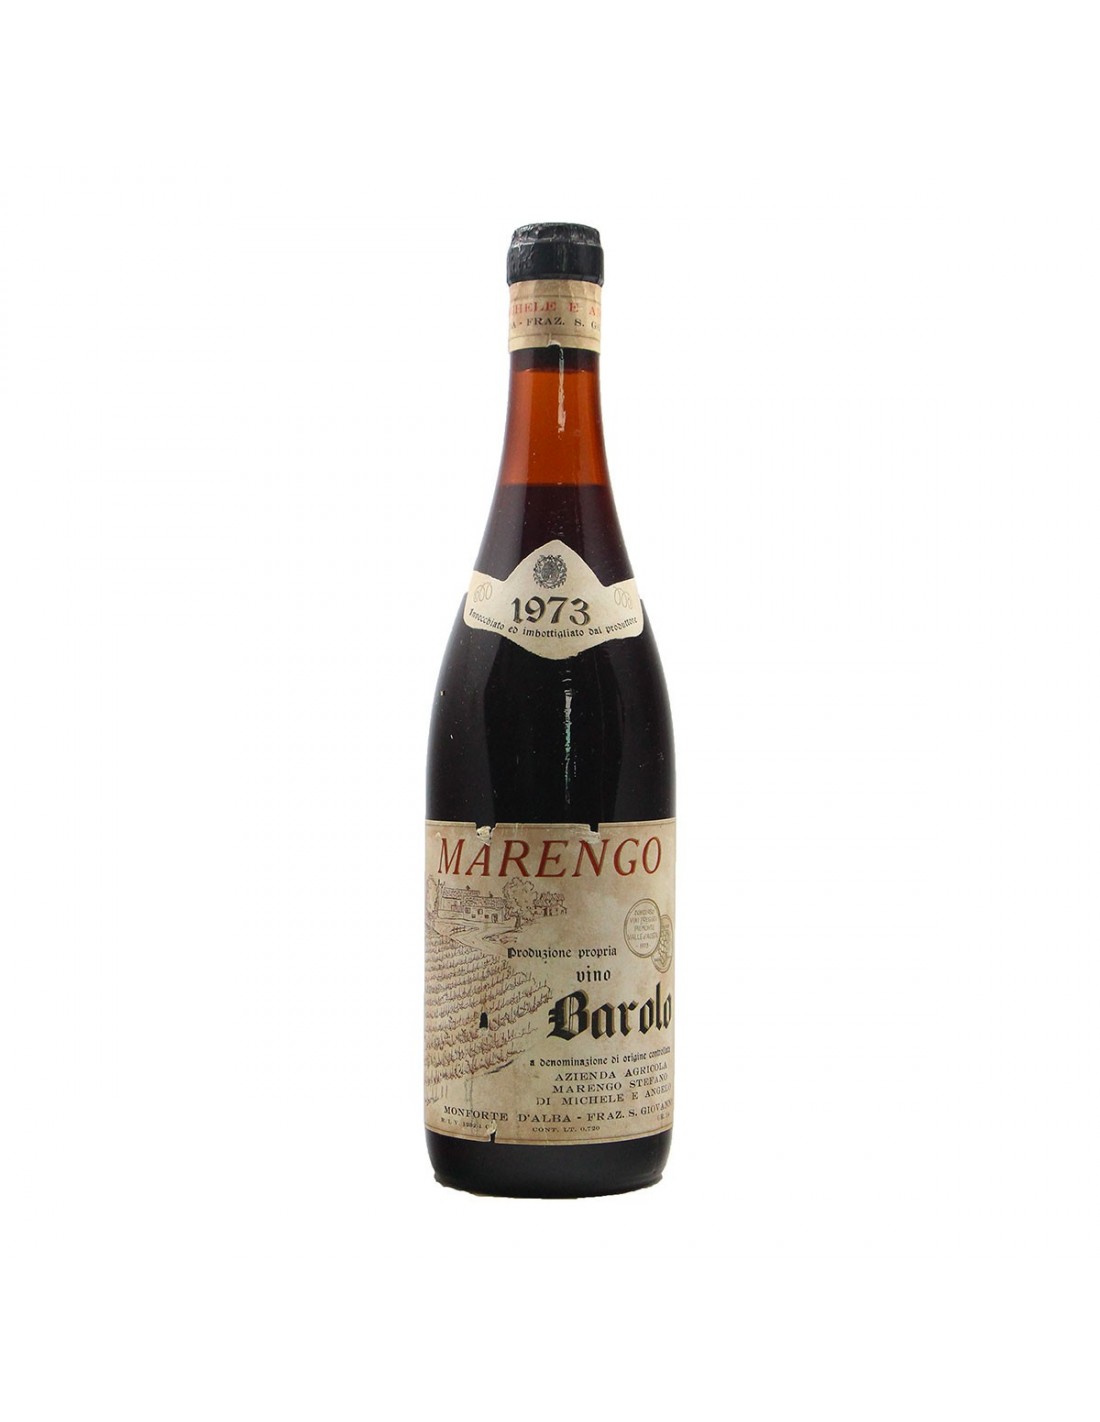 BAROLO 1973 MARENGO STEFANO Grandi Bottiglie